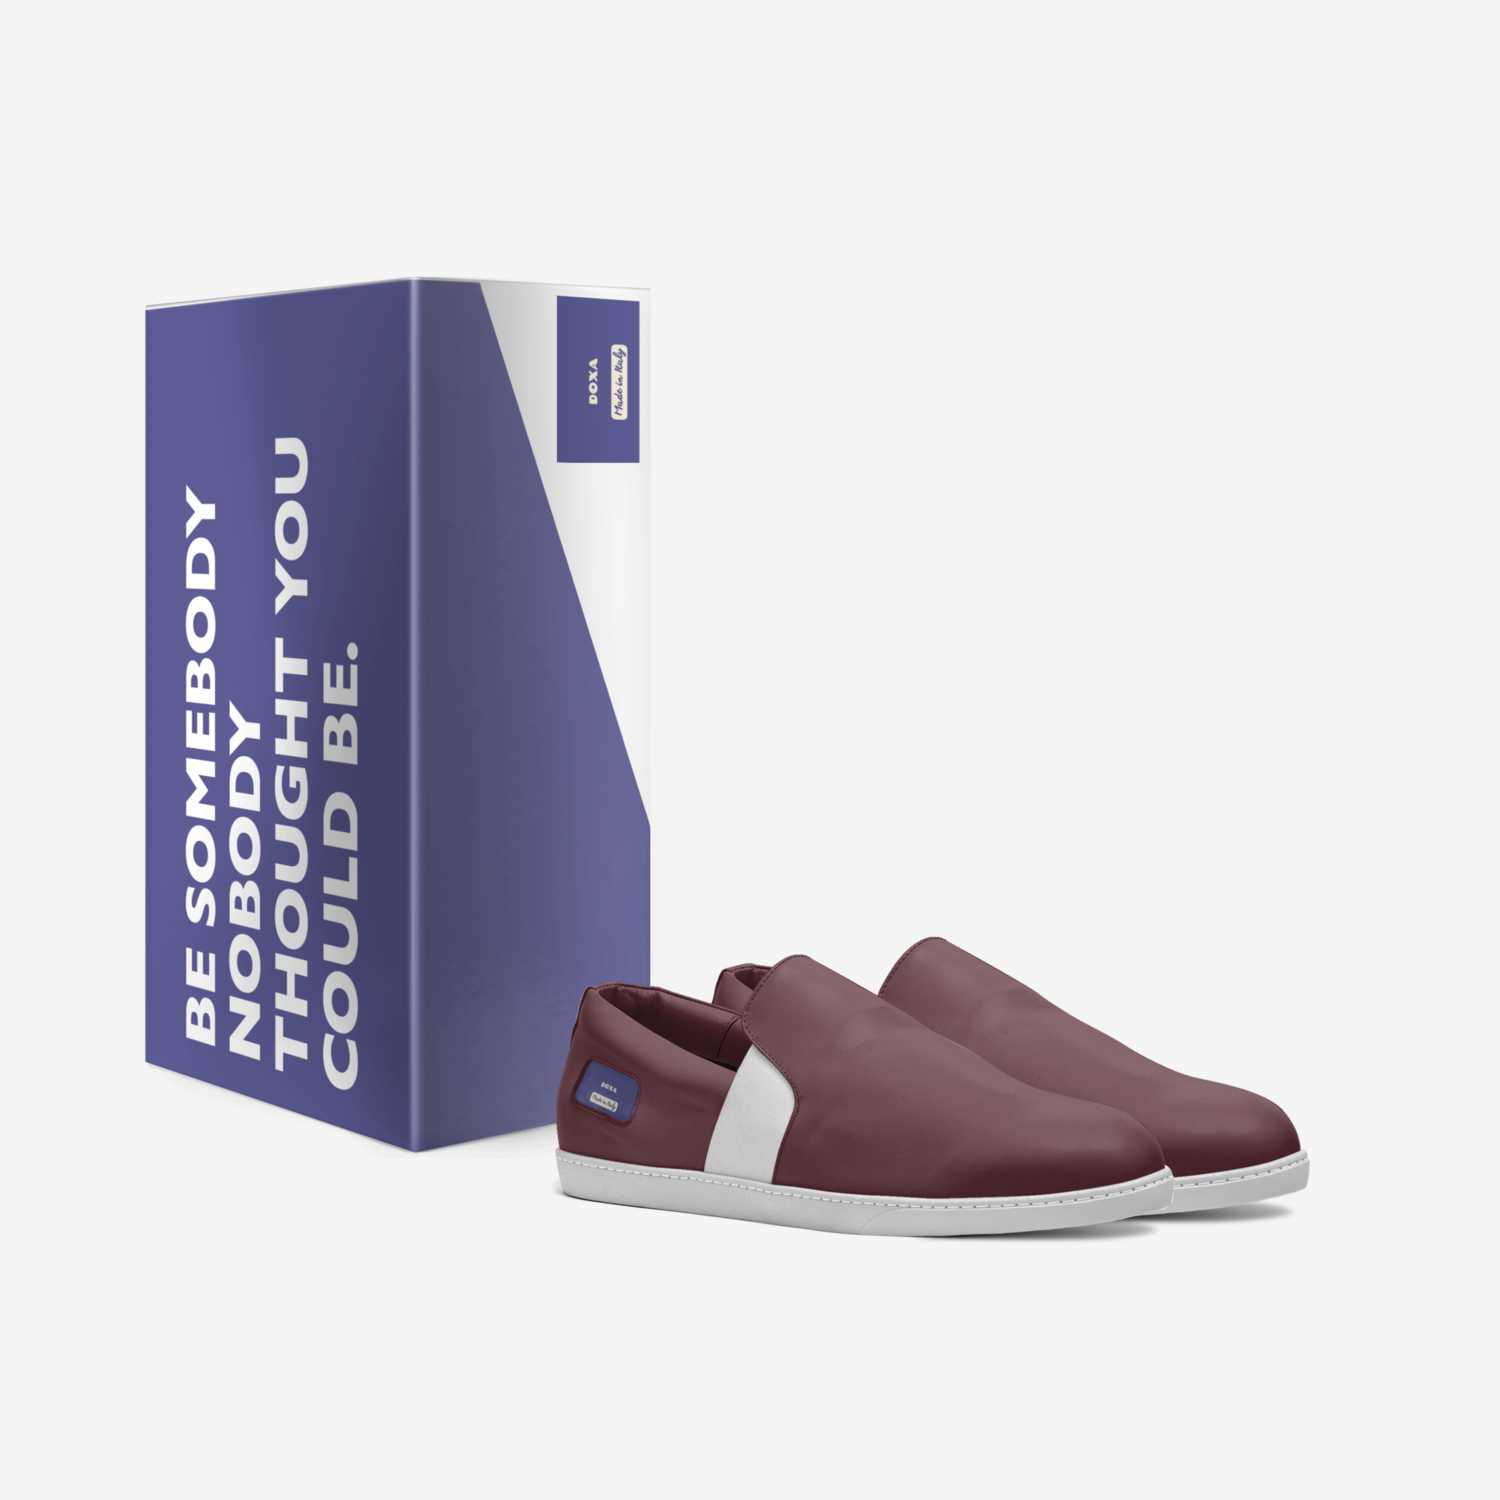 DOXA custom made in Italy shoes by Ferdy Ed | Box view